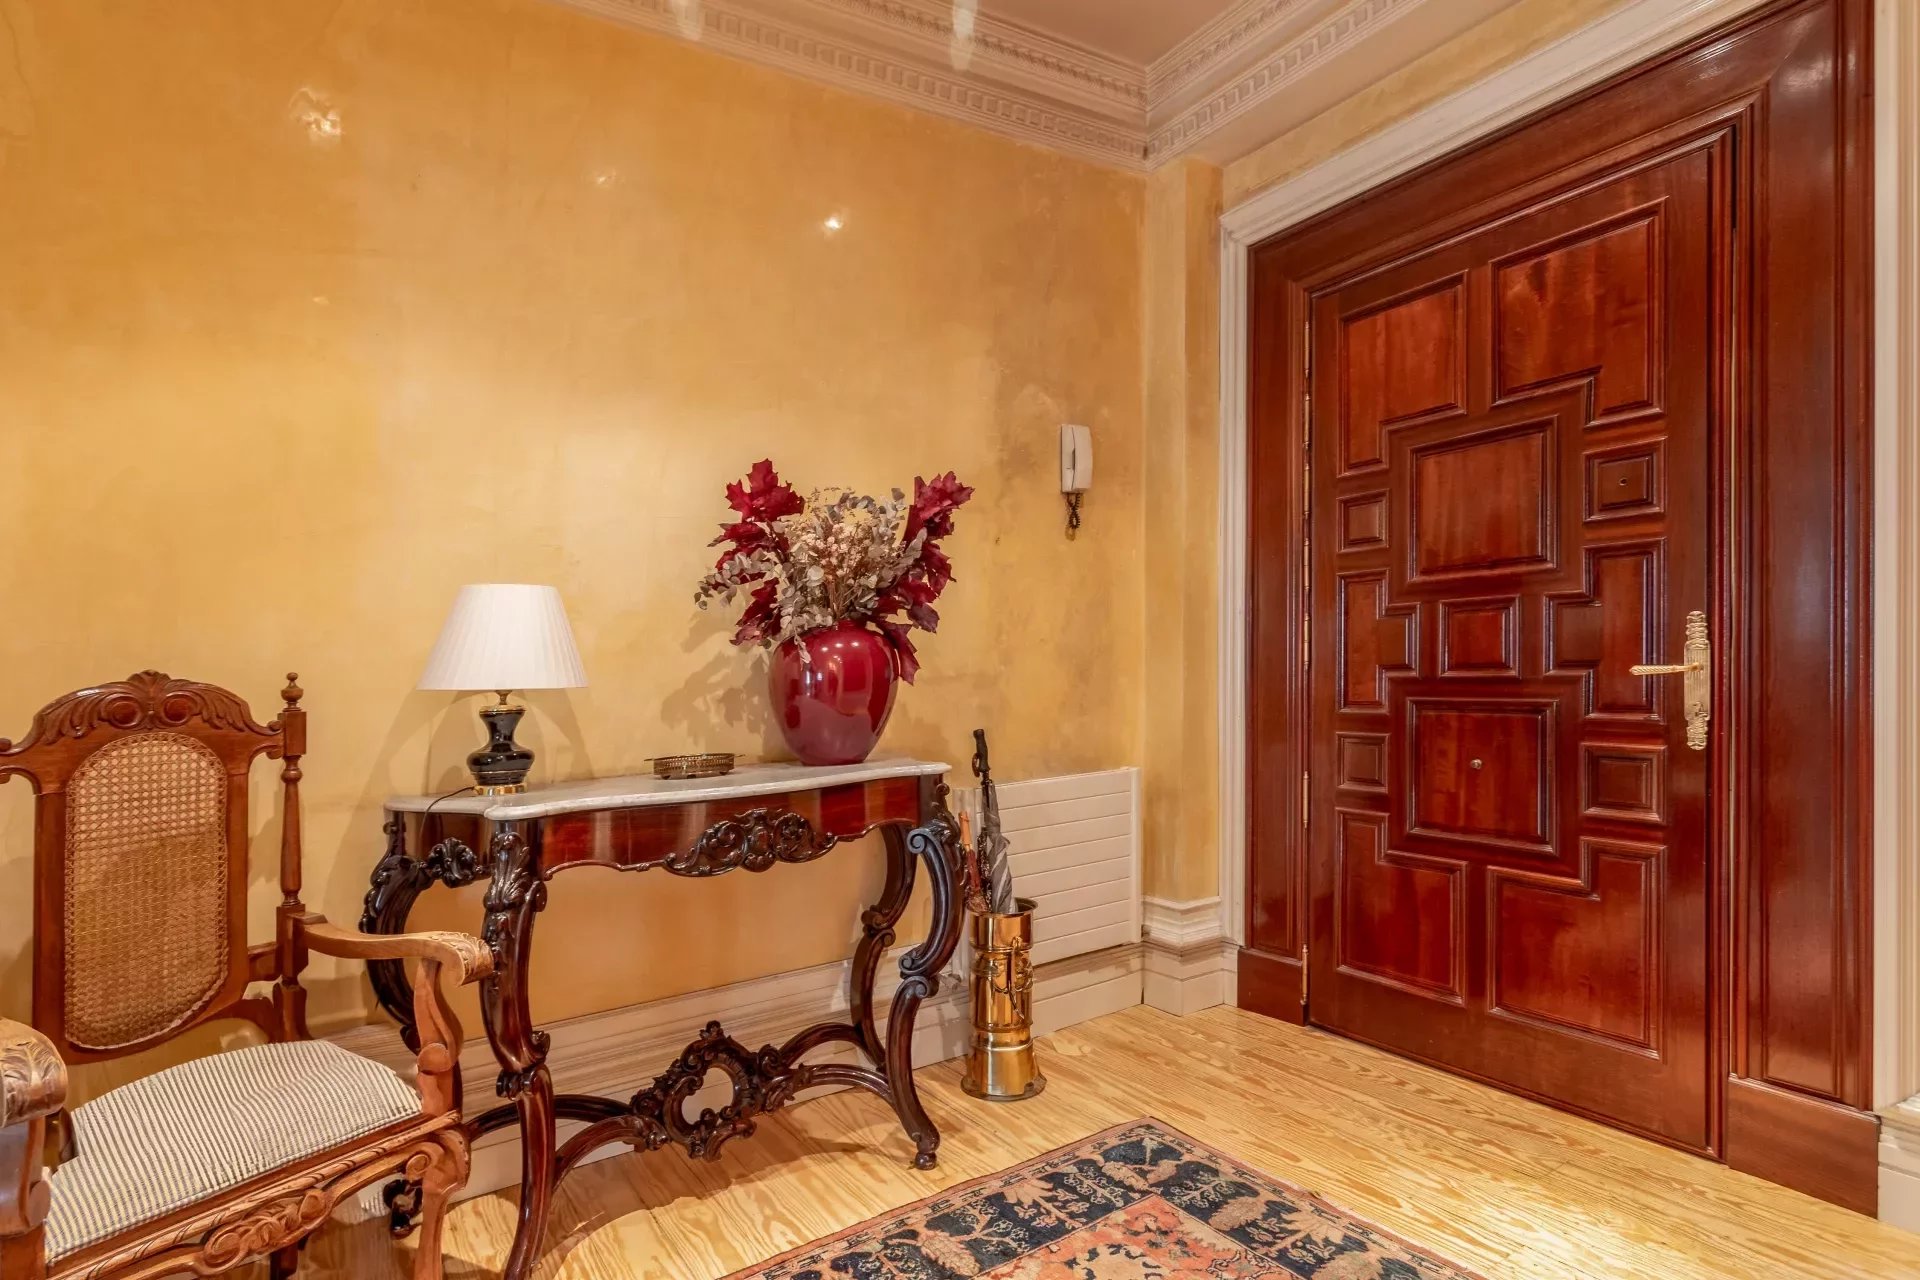 Exclusive apartment in the prestigious area of Almagro, Madrid - picture 4 title=